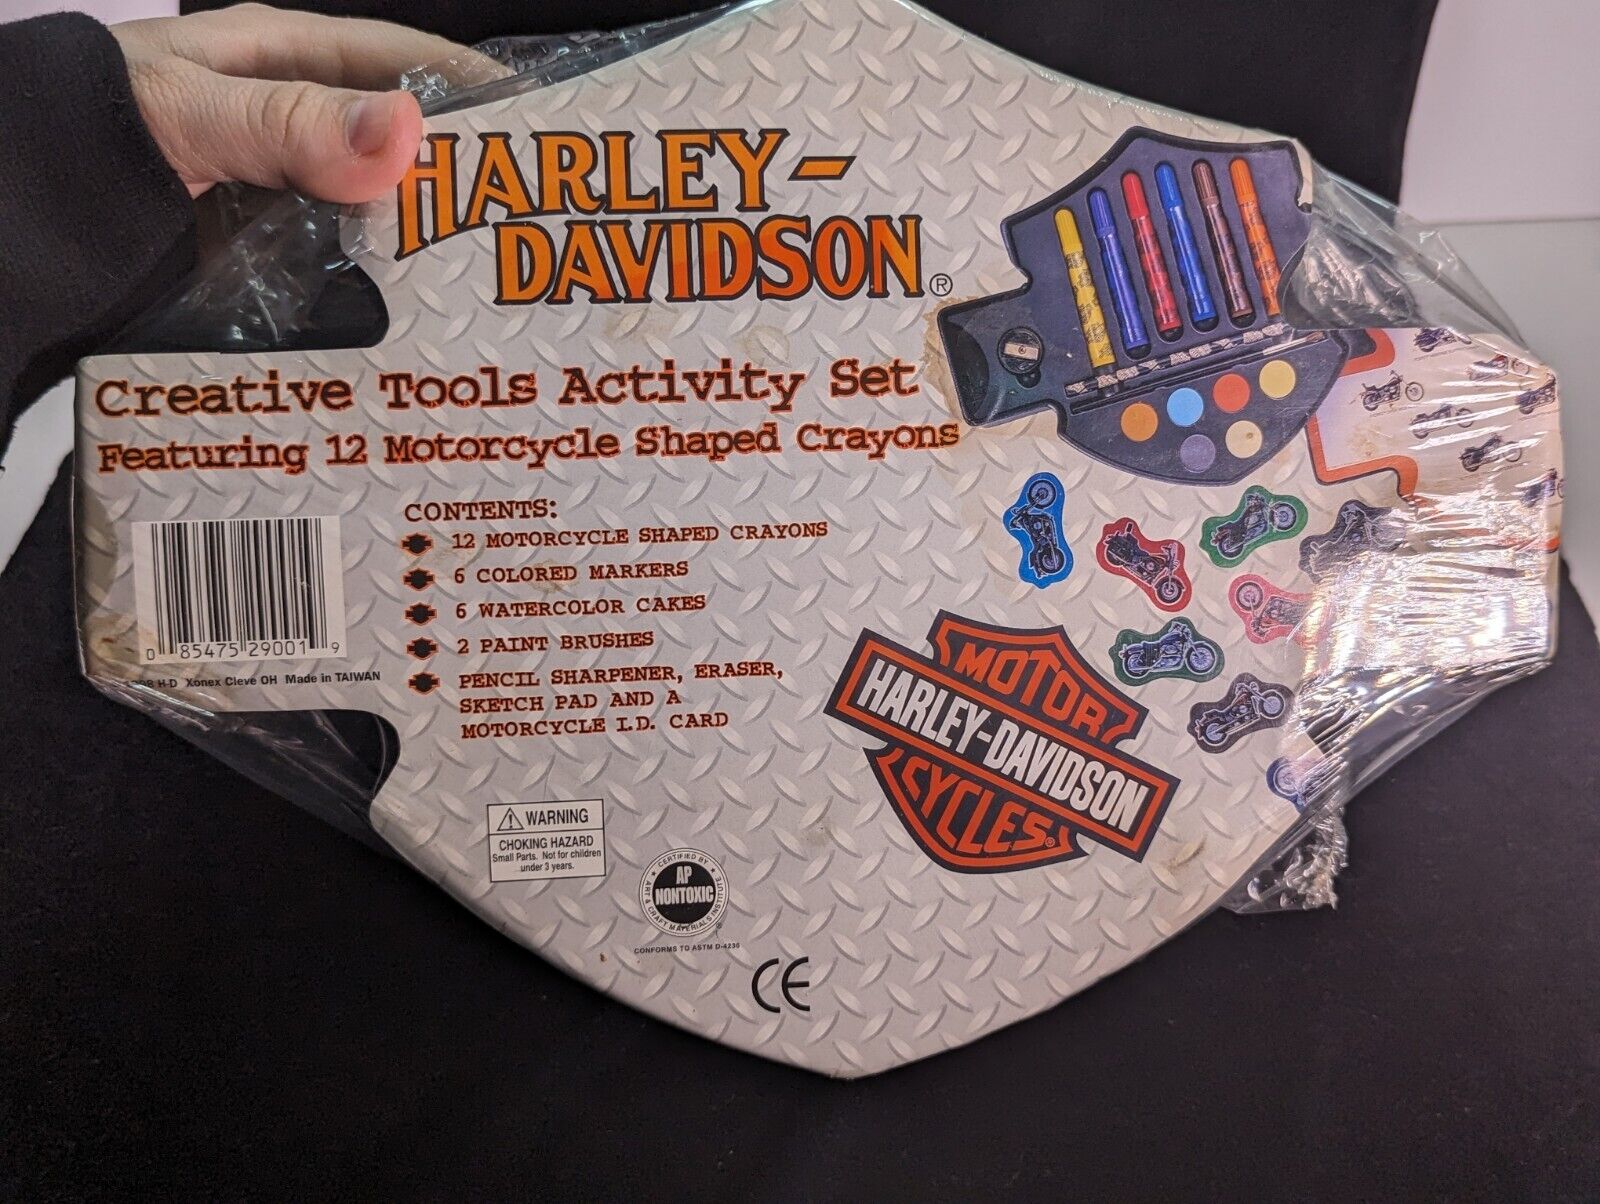 Vintage 1998 Harley Davidson Creative Tools Activity Set Motorcycle Crayons New